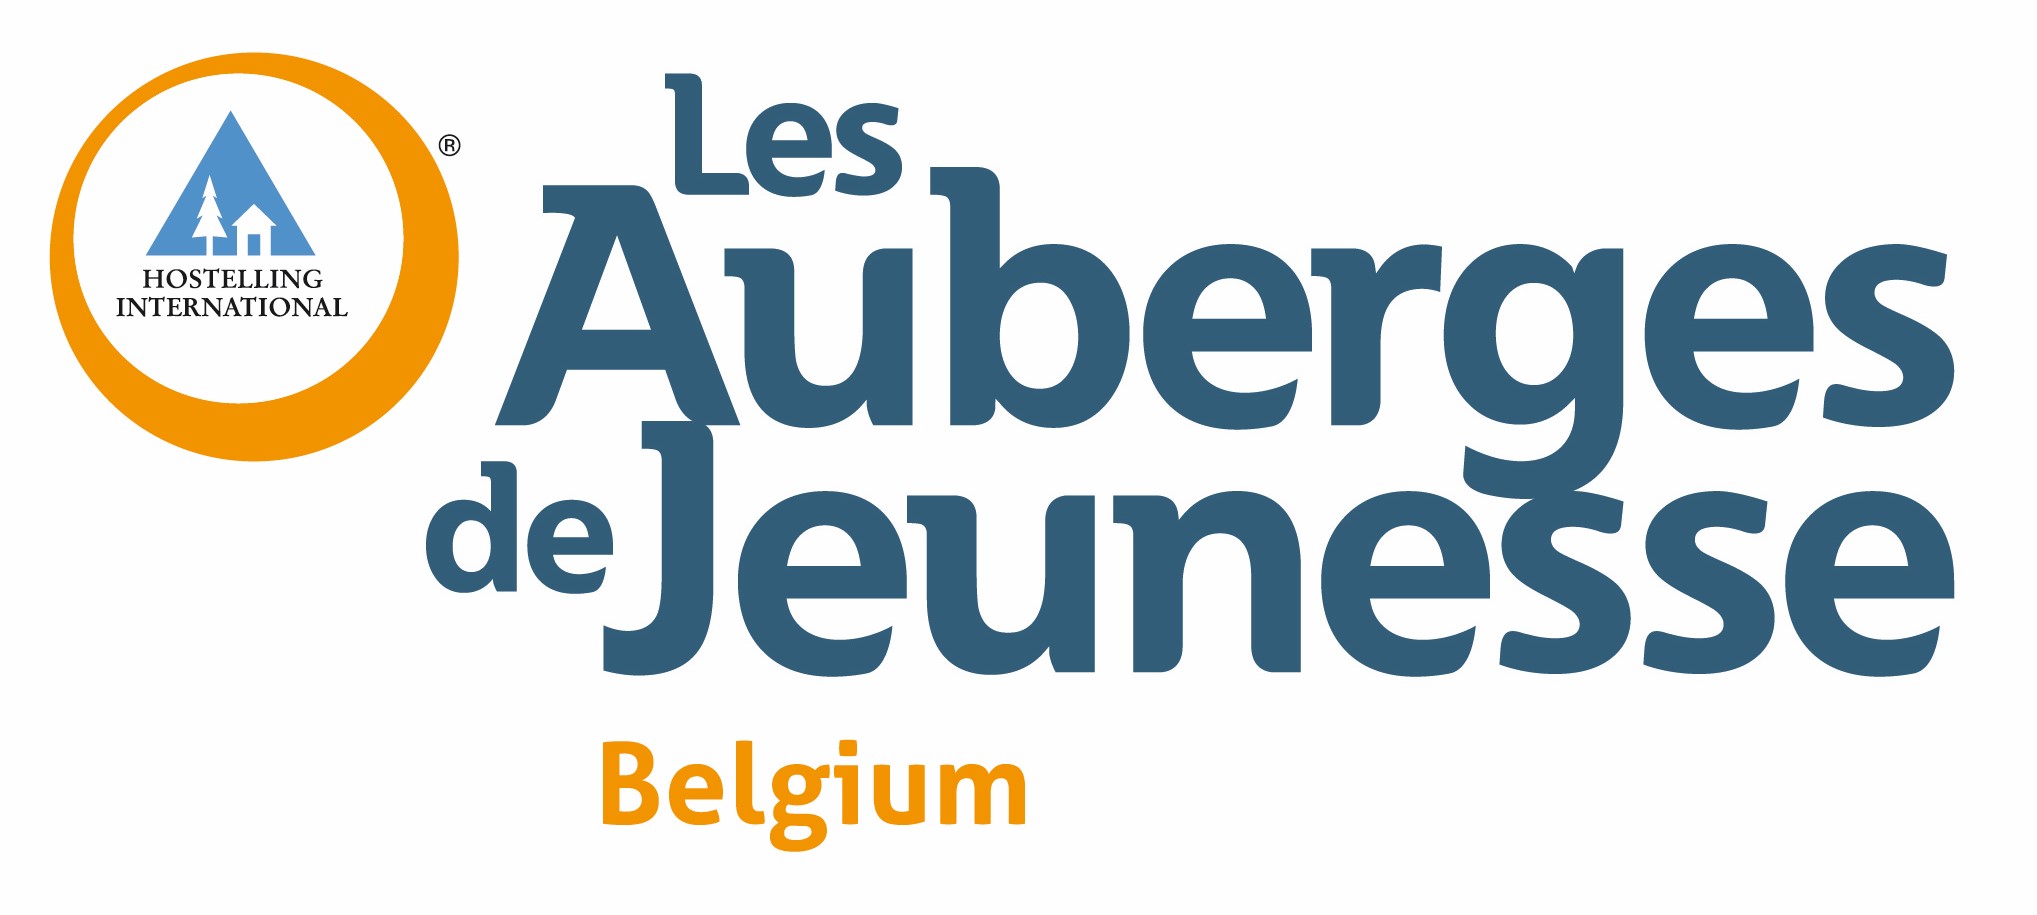 Logo of Auberges de jeunesse